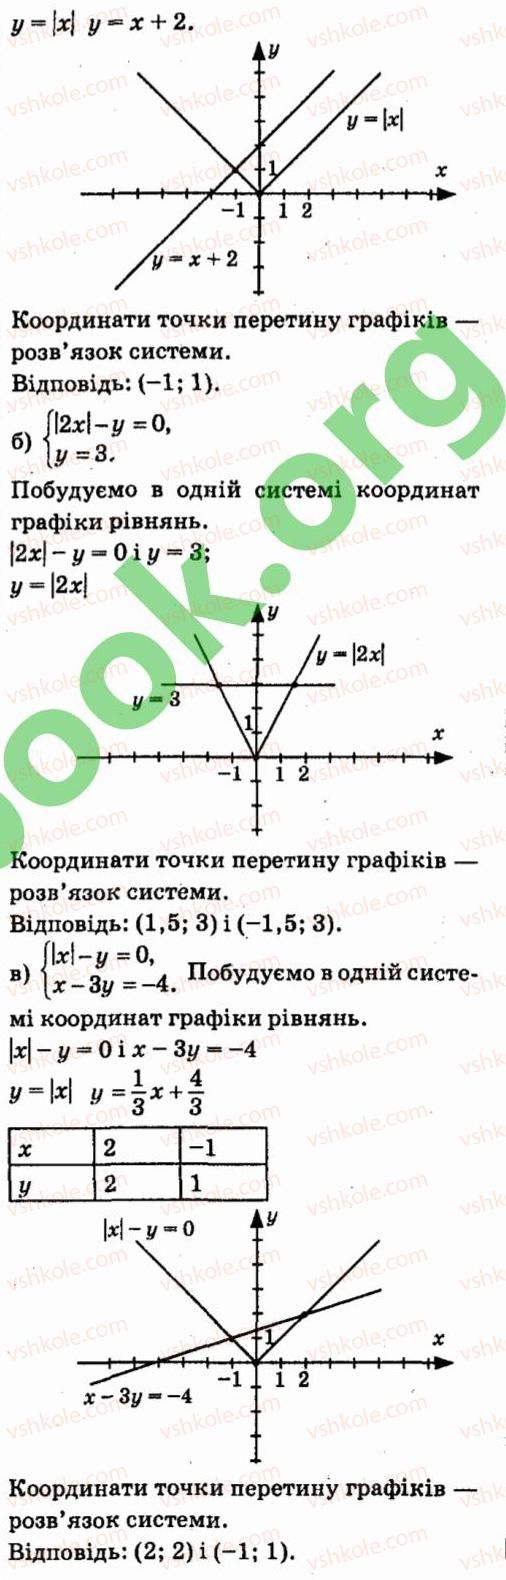 7-algebra-vr-kravchuk-mv-pidruchna-gm-yanchenko-2015--7-sistemi-linijnih-rivnyan-iz-dvoma-zminnimi-928-rnd3095.jpg